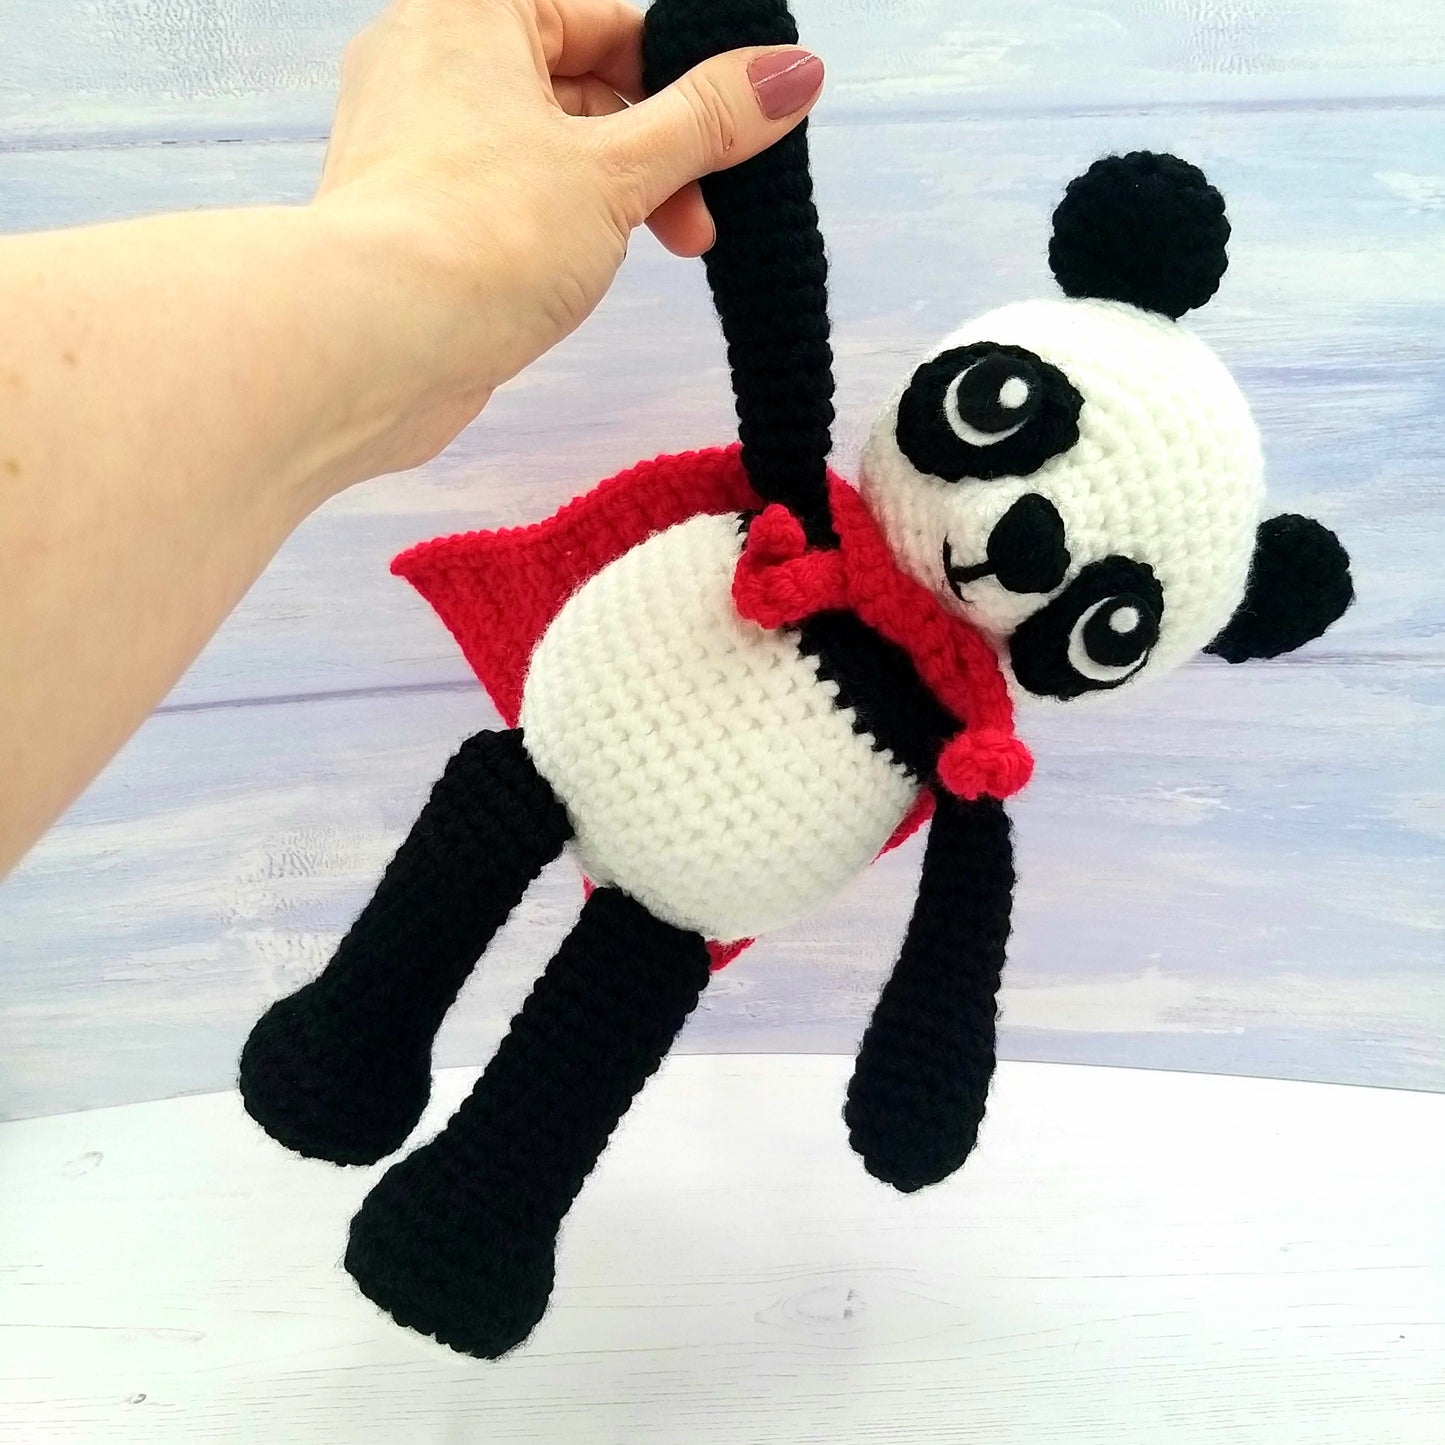 Peter the Panda and Melinda the Panda Luxury Crochet Kit!